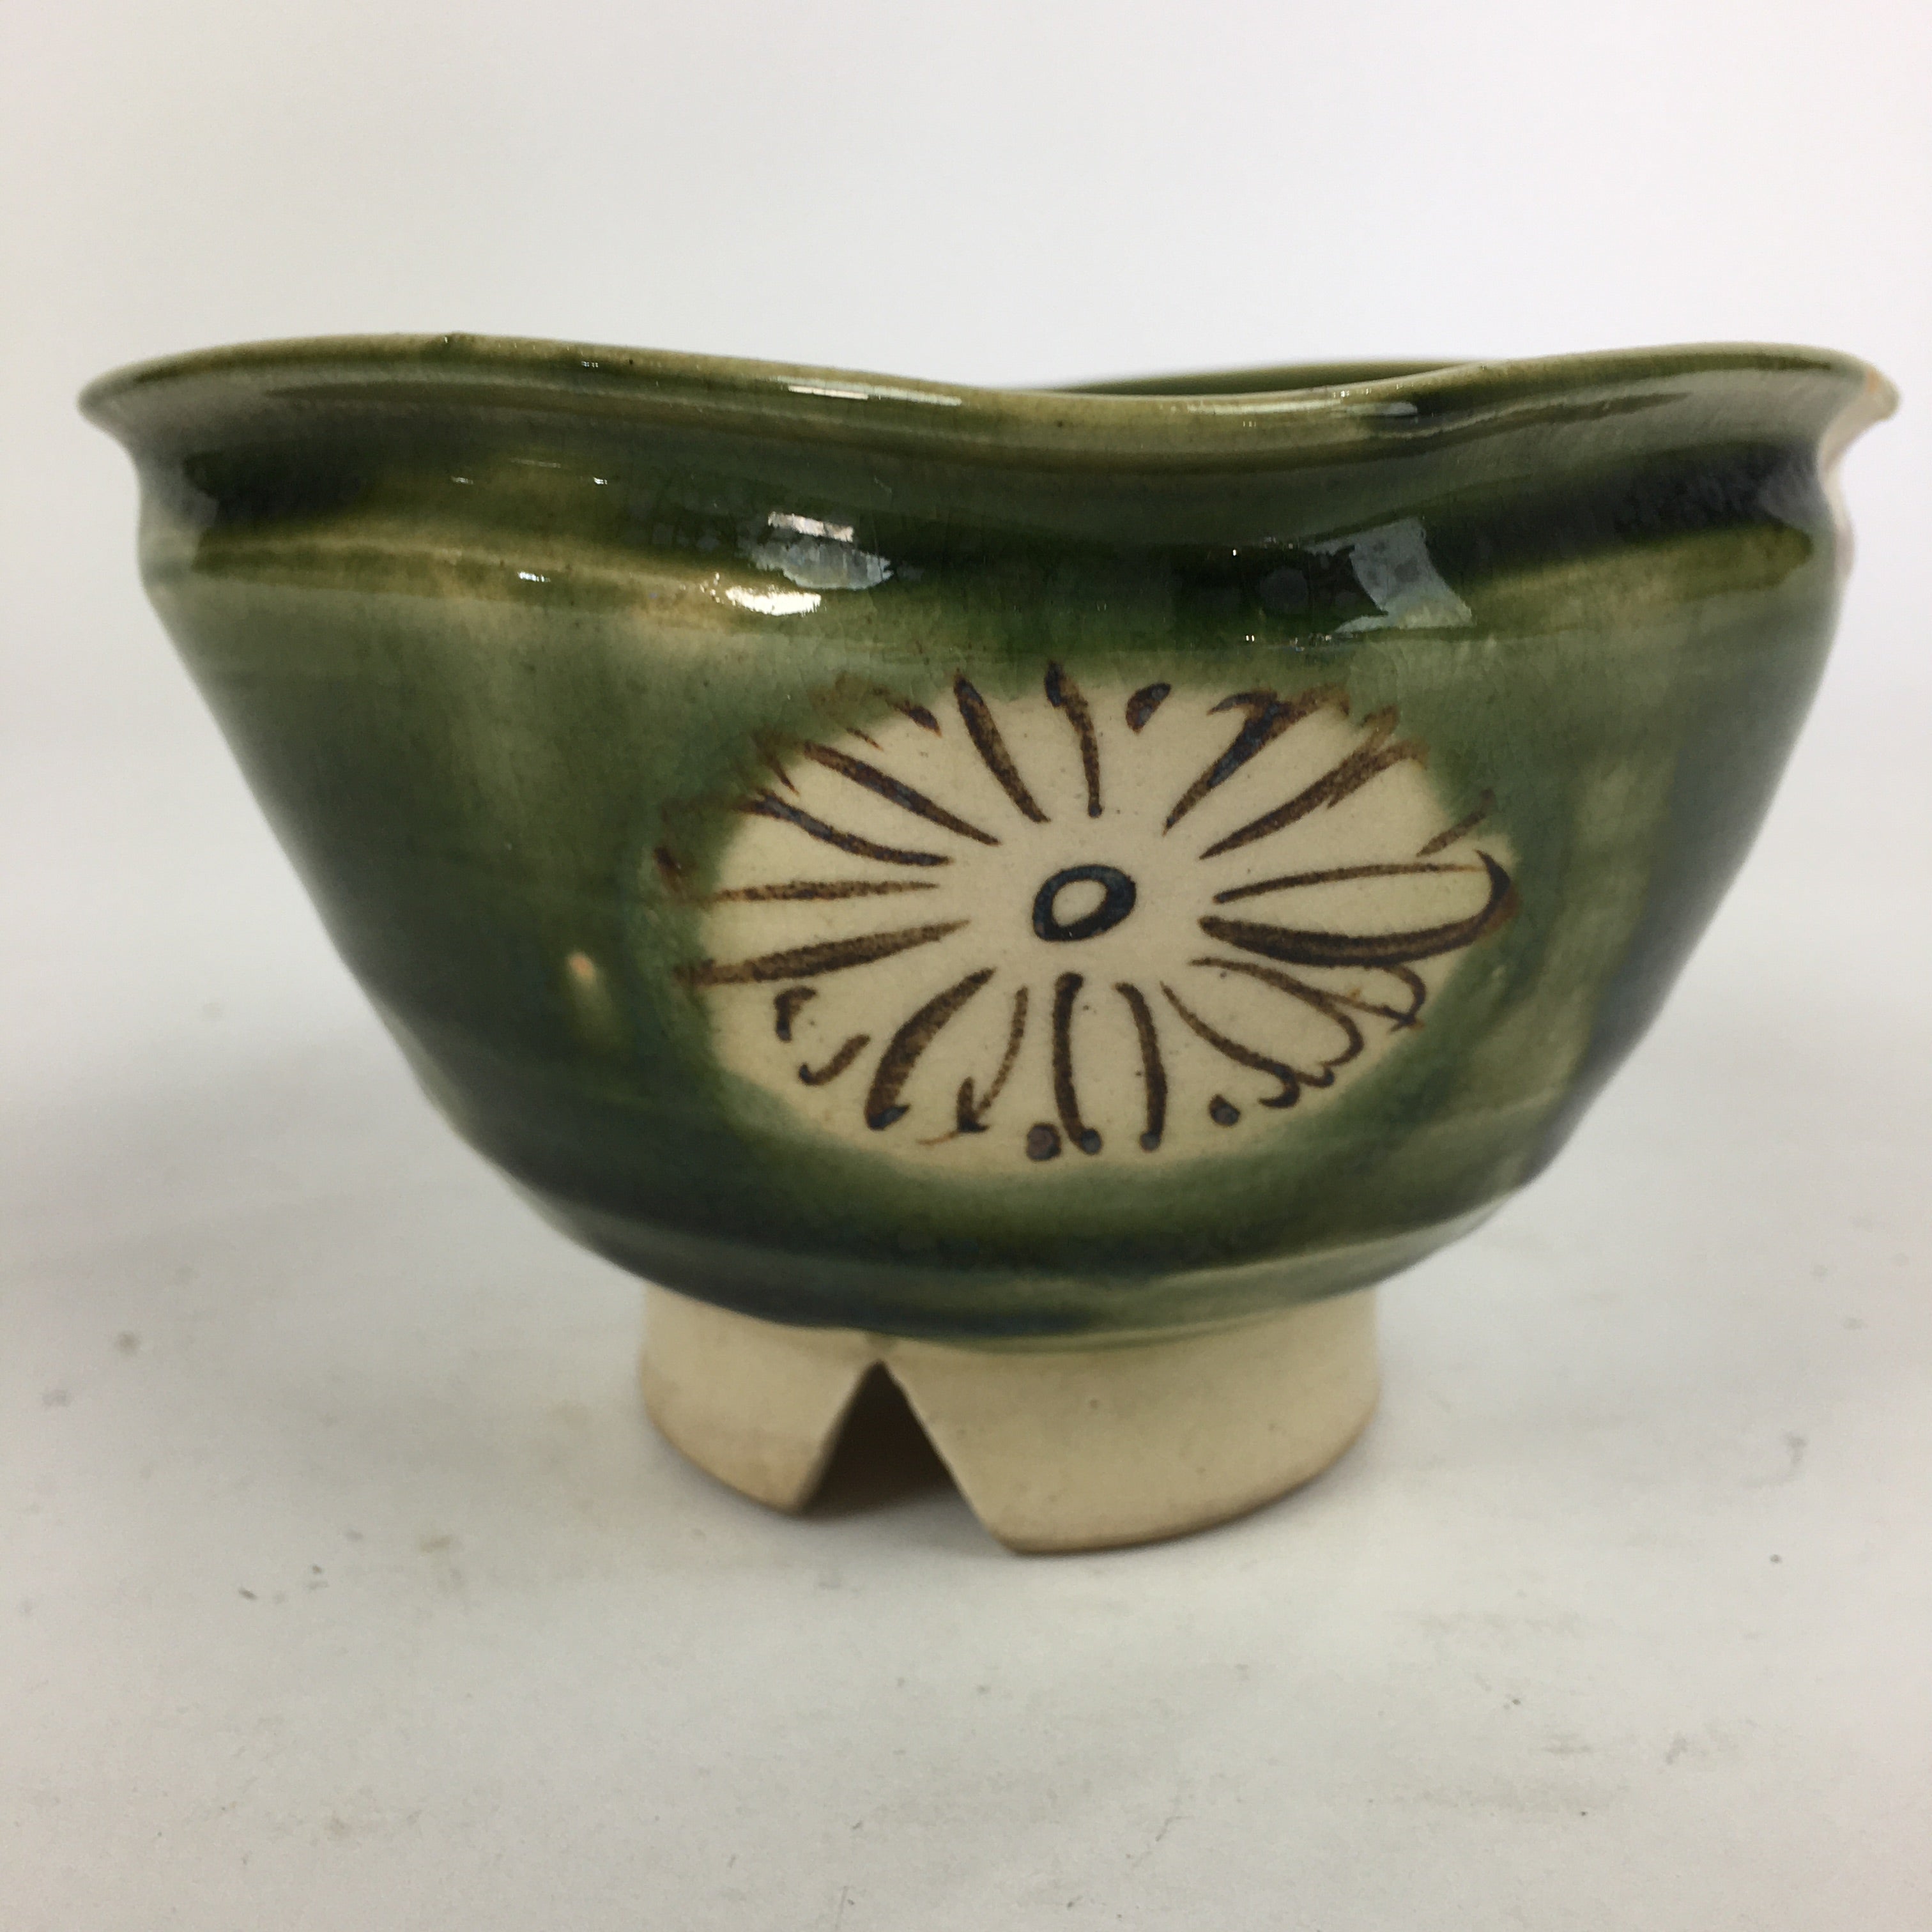 Japanese Ceramic Oribe Ware Bowl Vtg Pottery Green Glaze Square Shape PP839